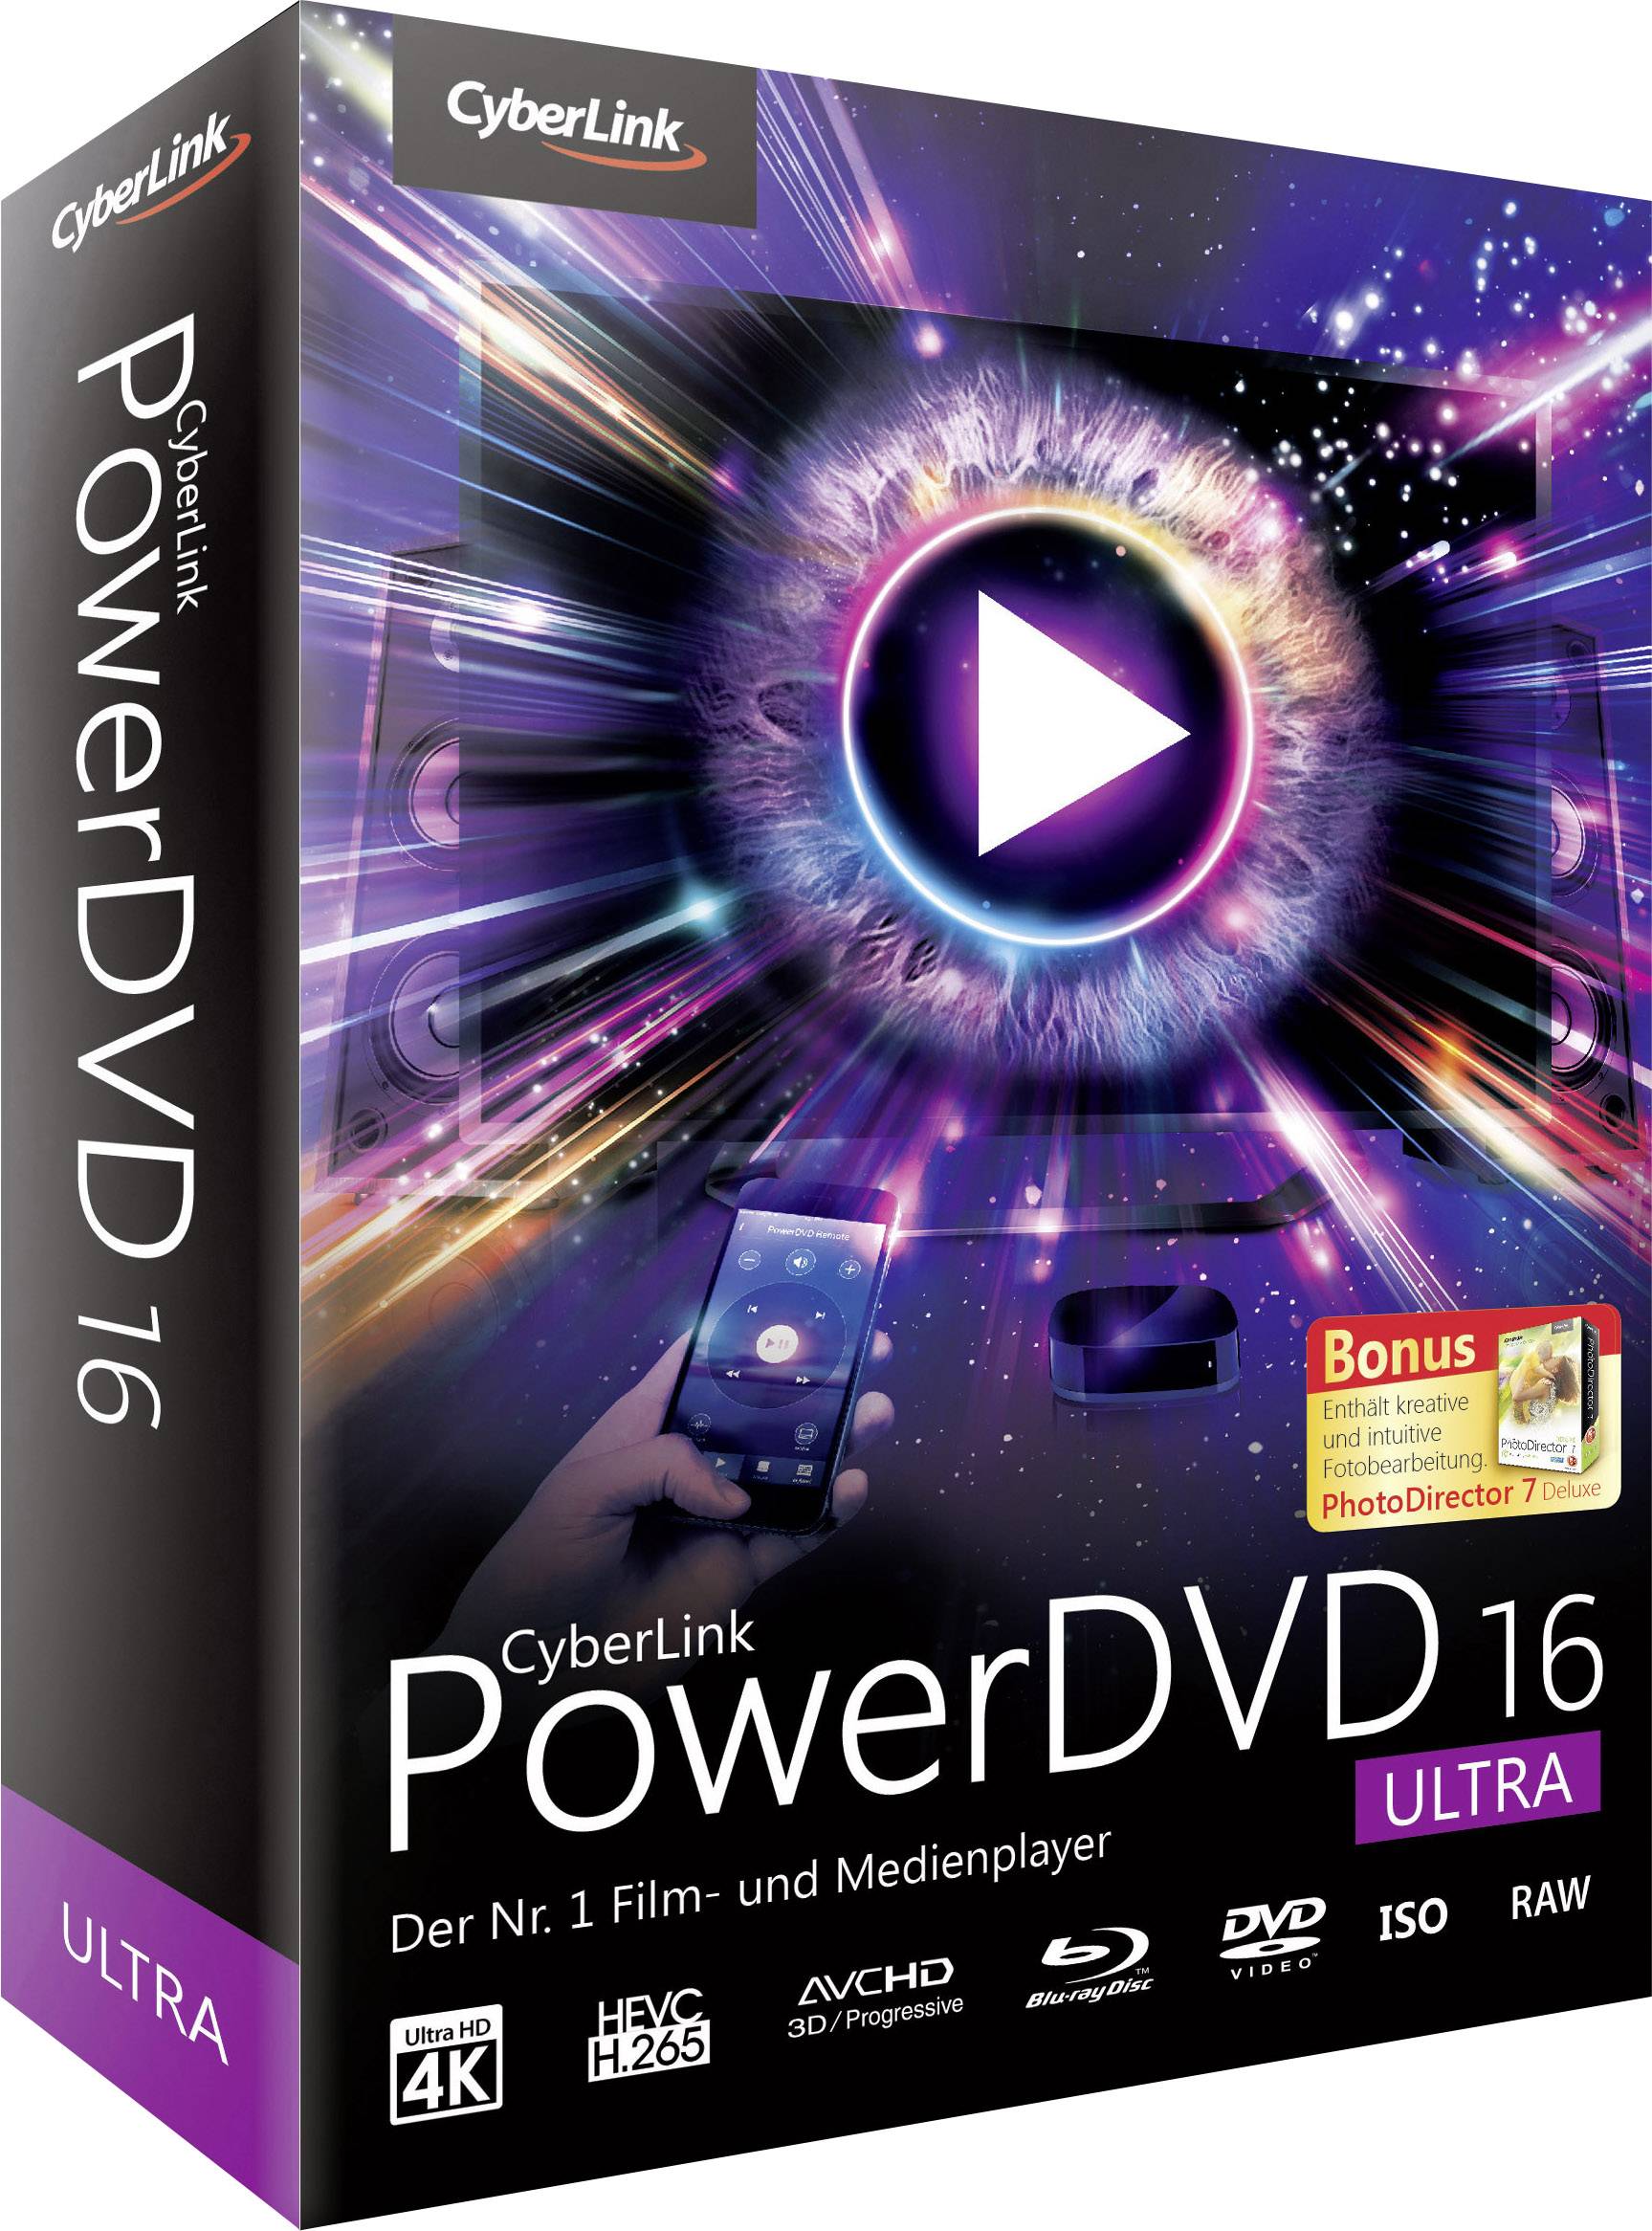 powerdvd 16 ultra review